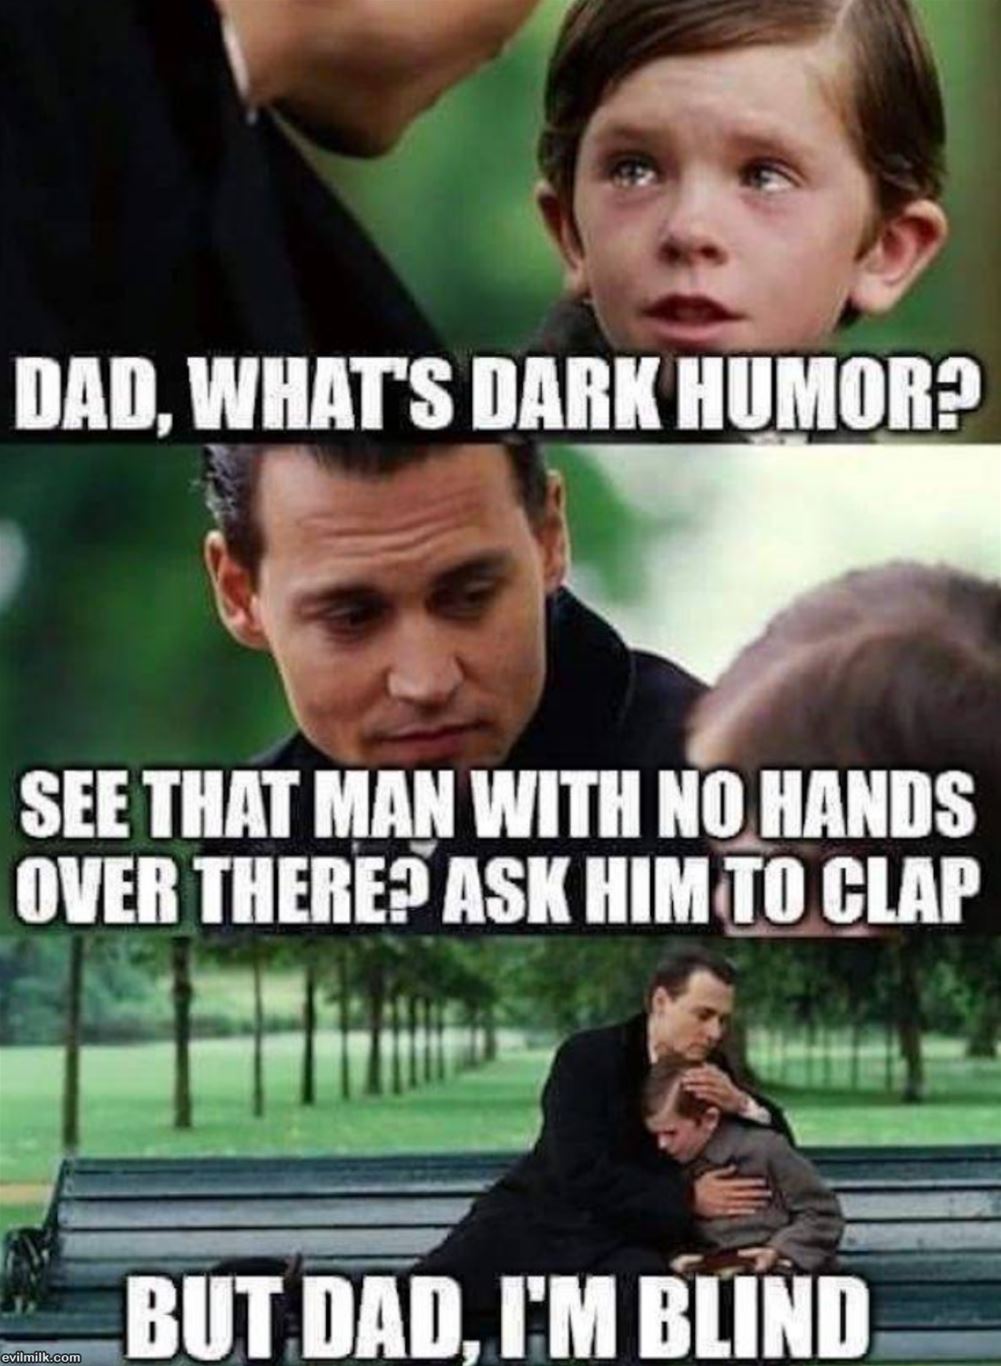 Dark Humor